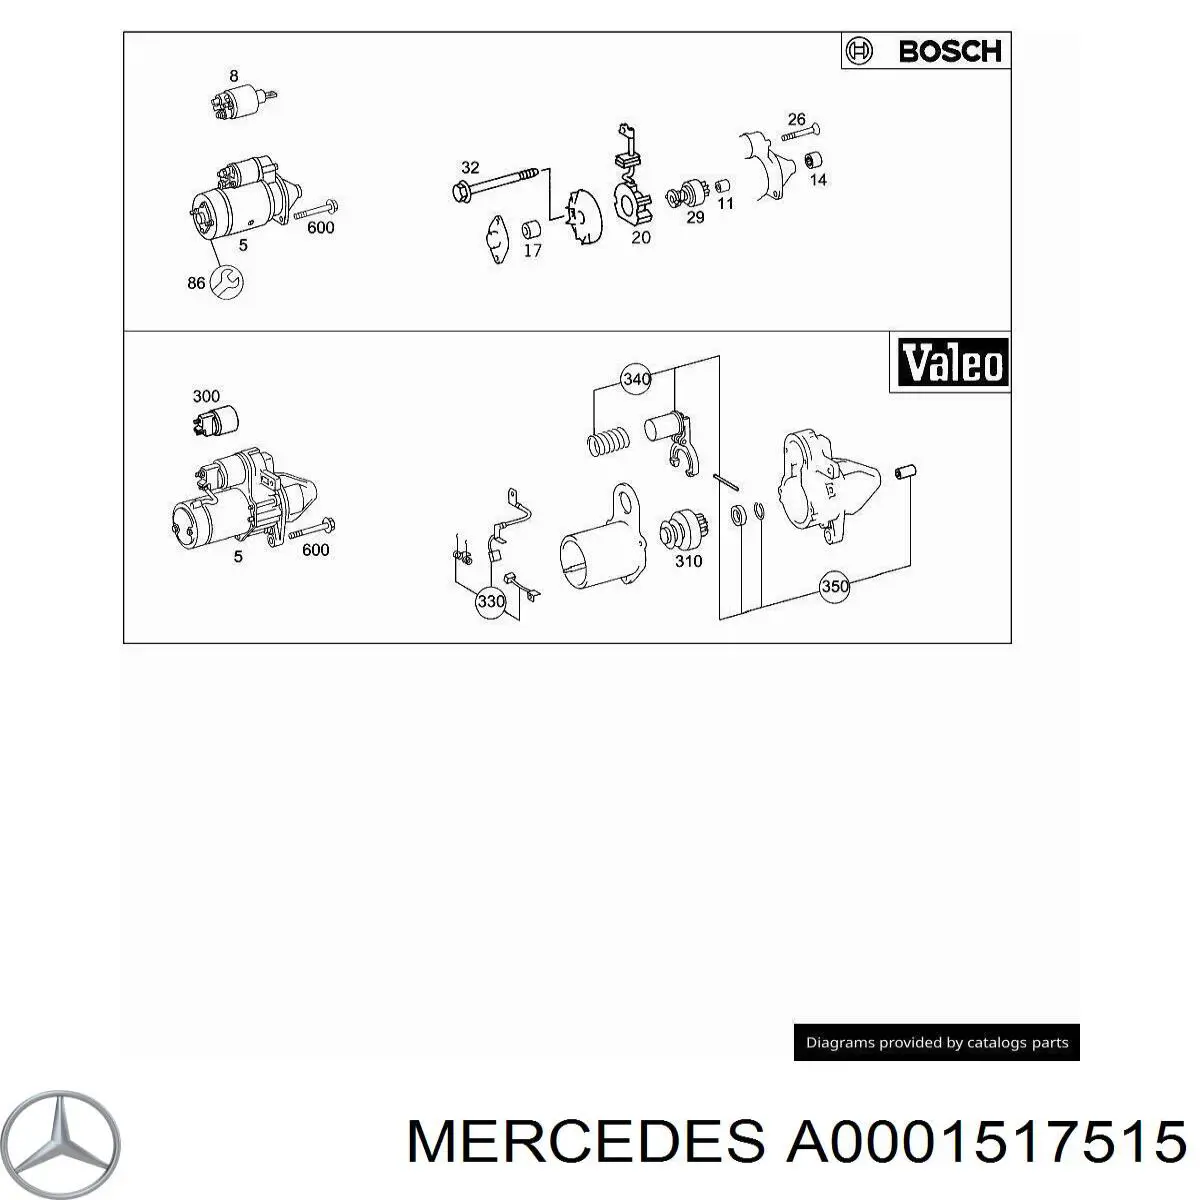 A0001517515 Mercedes induzido (rotor do motor de arranco)